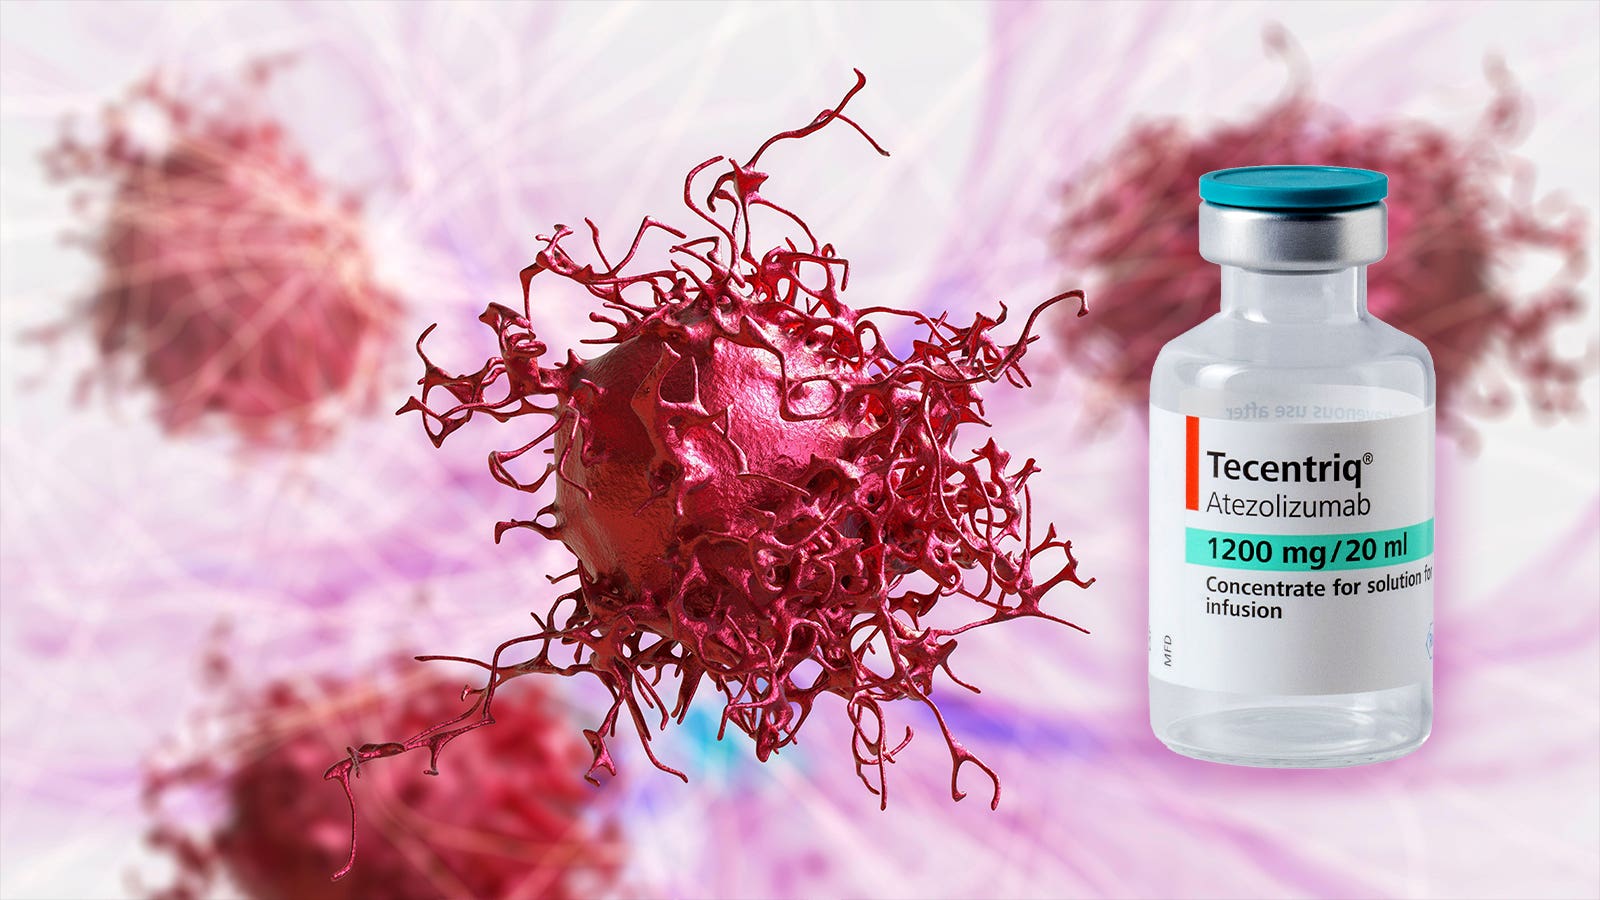 Adding Atezolizumab Improves Survival in Advanced Cervical Cancer